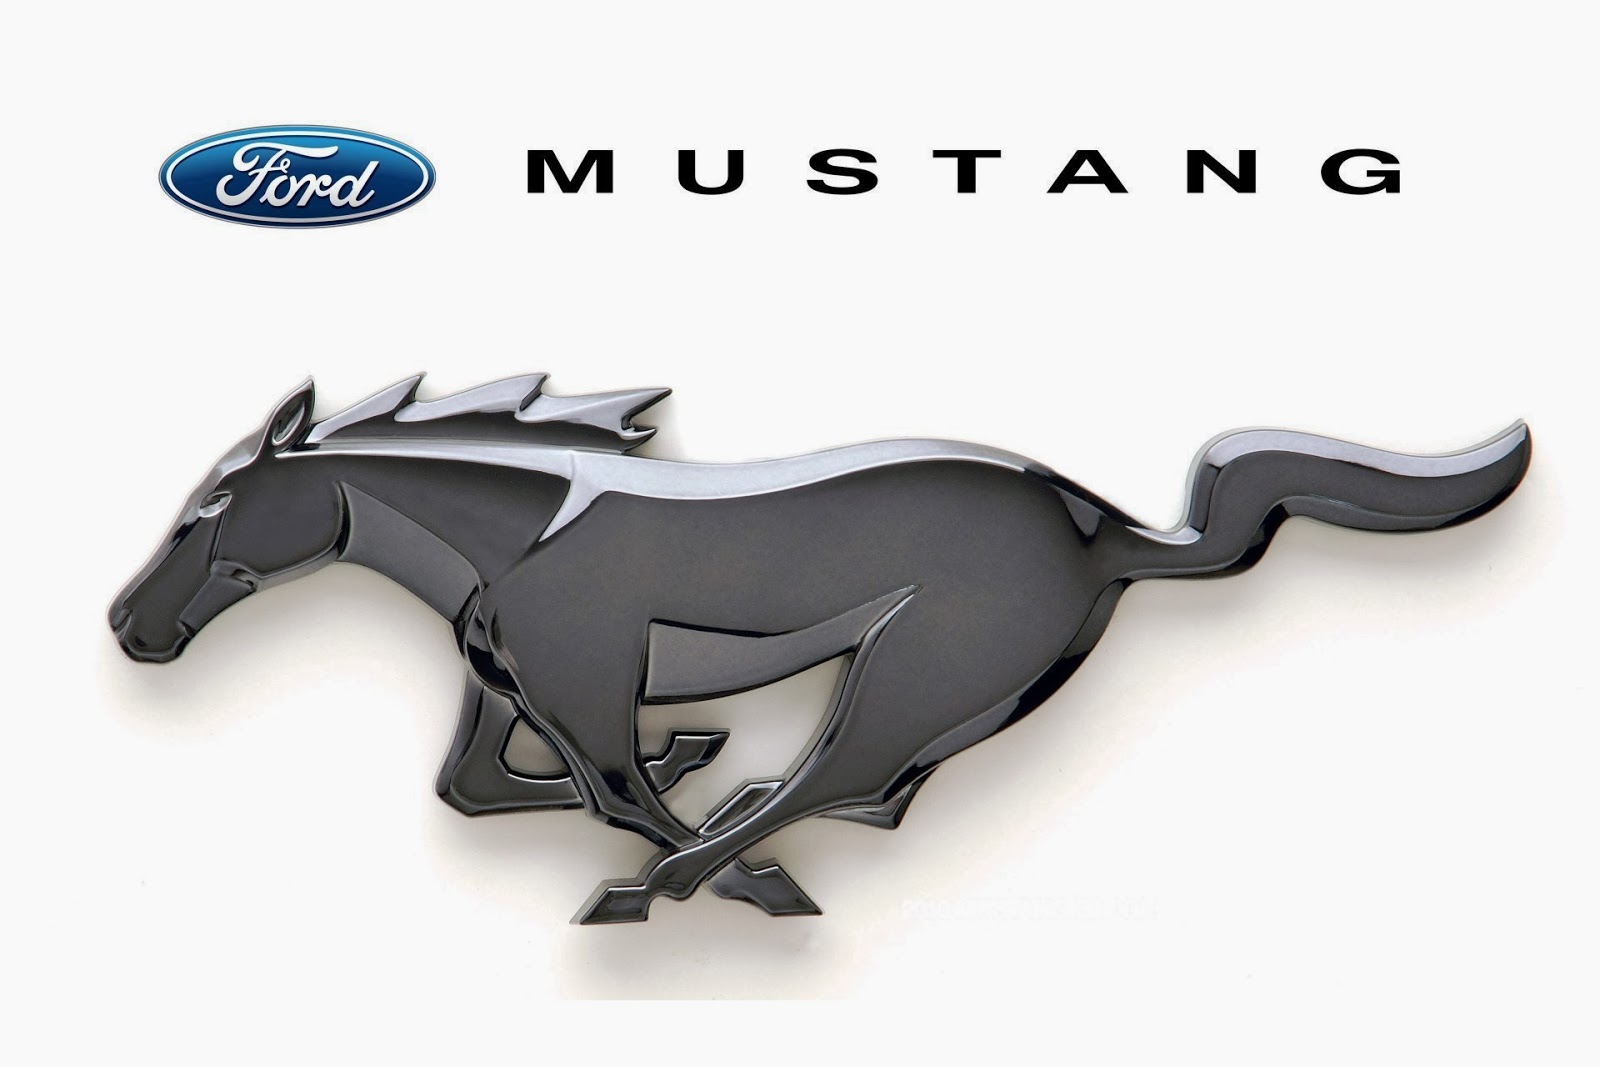 Ford mustang gt logo